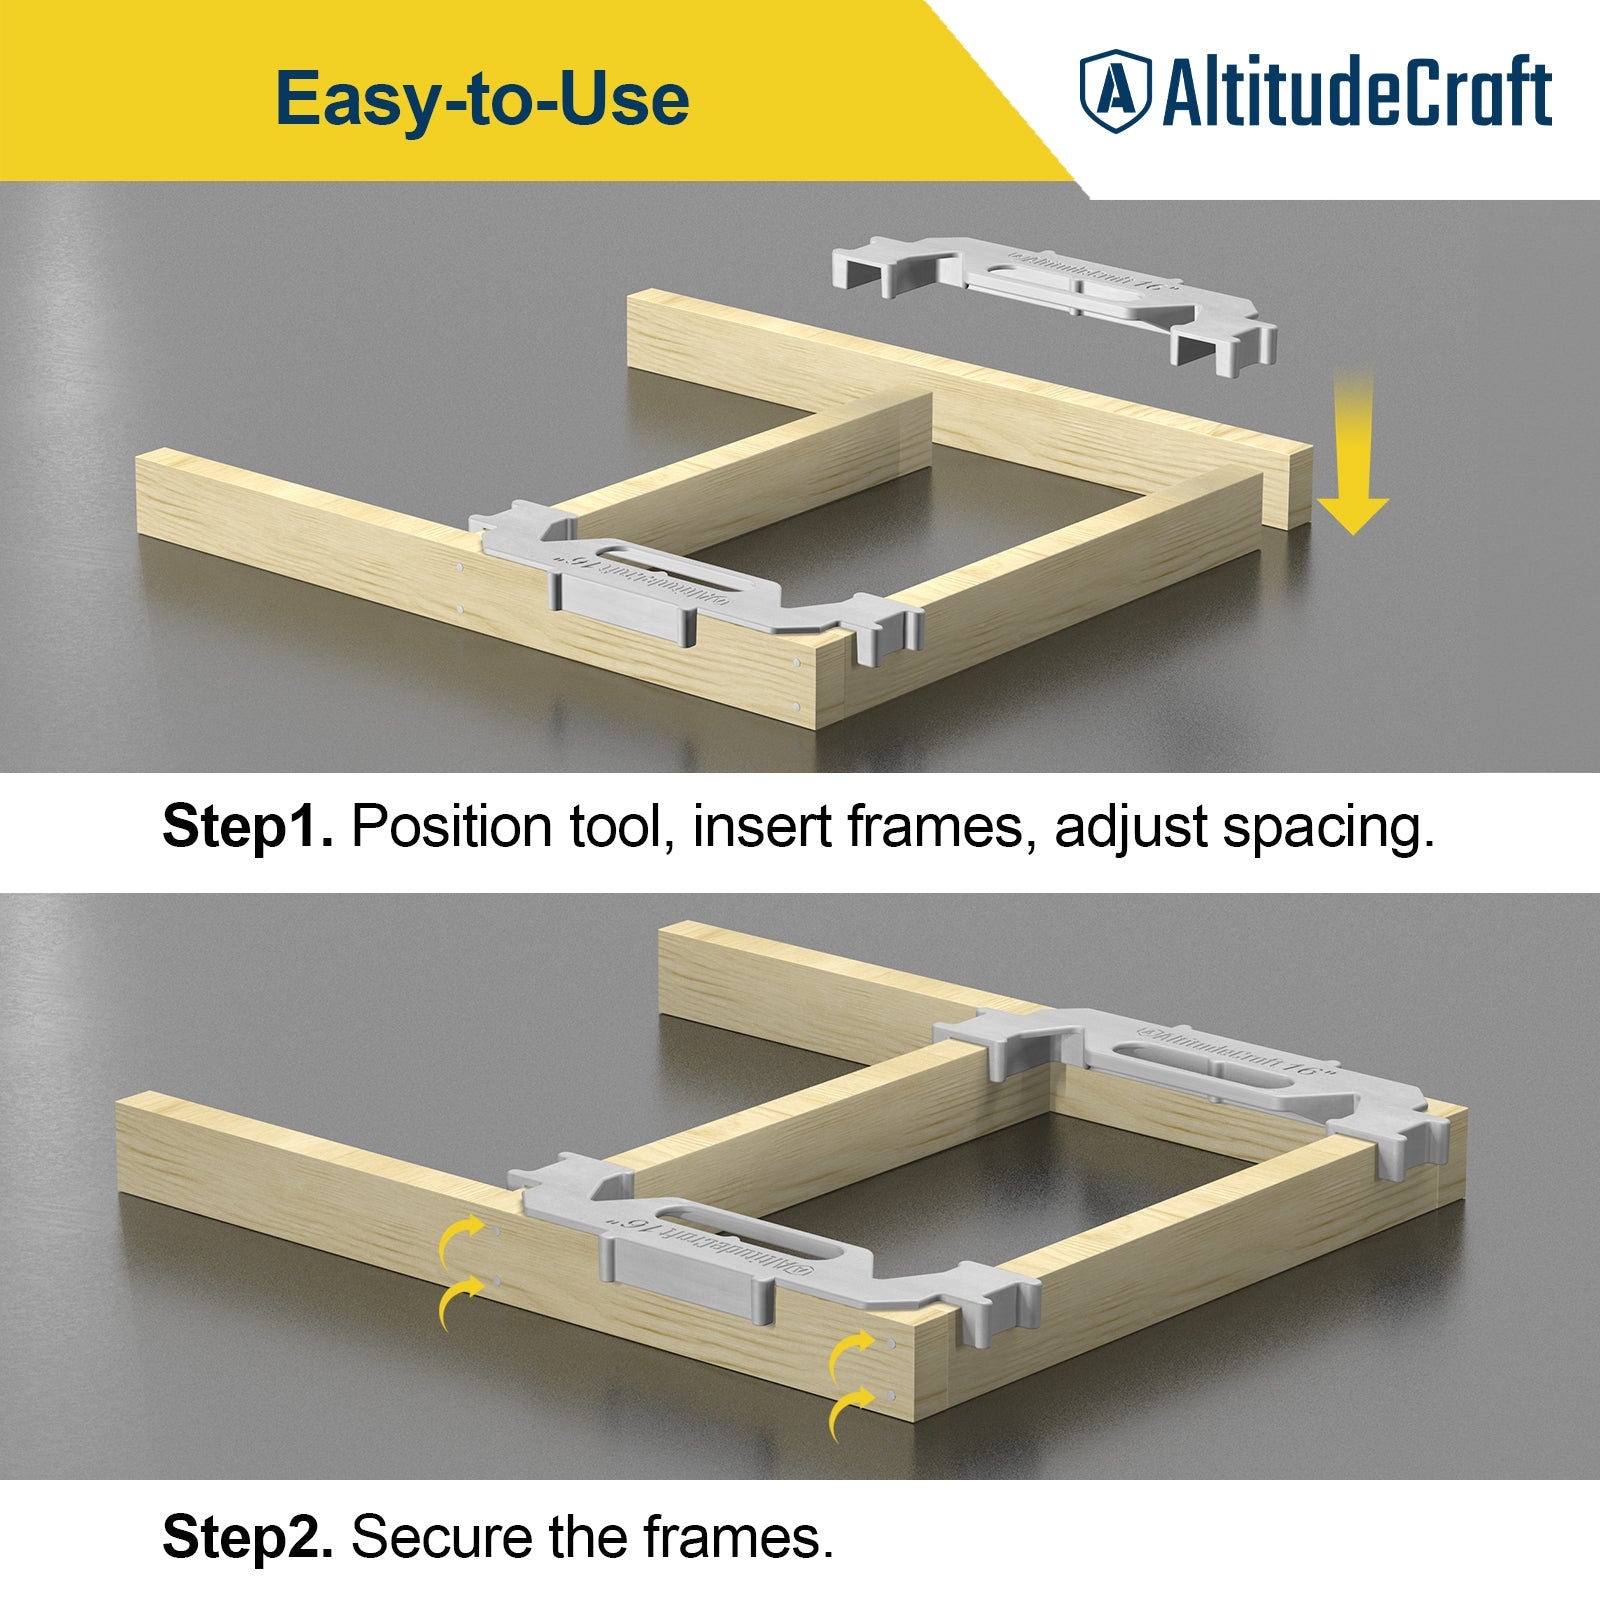 Ease of Use: Installing AltitudeCraft Framing Tool